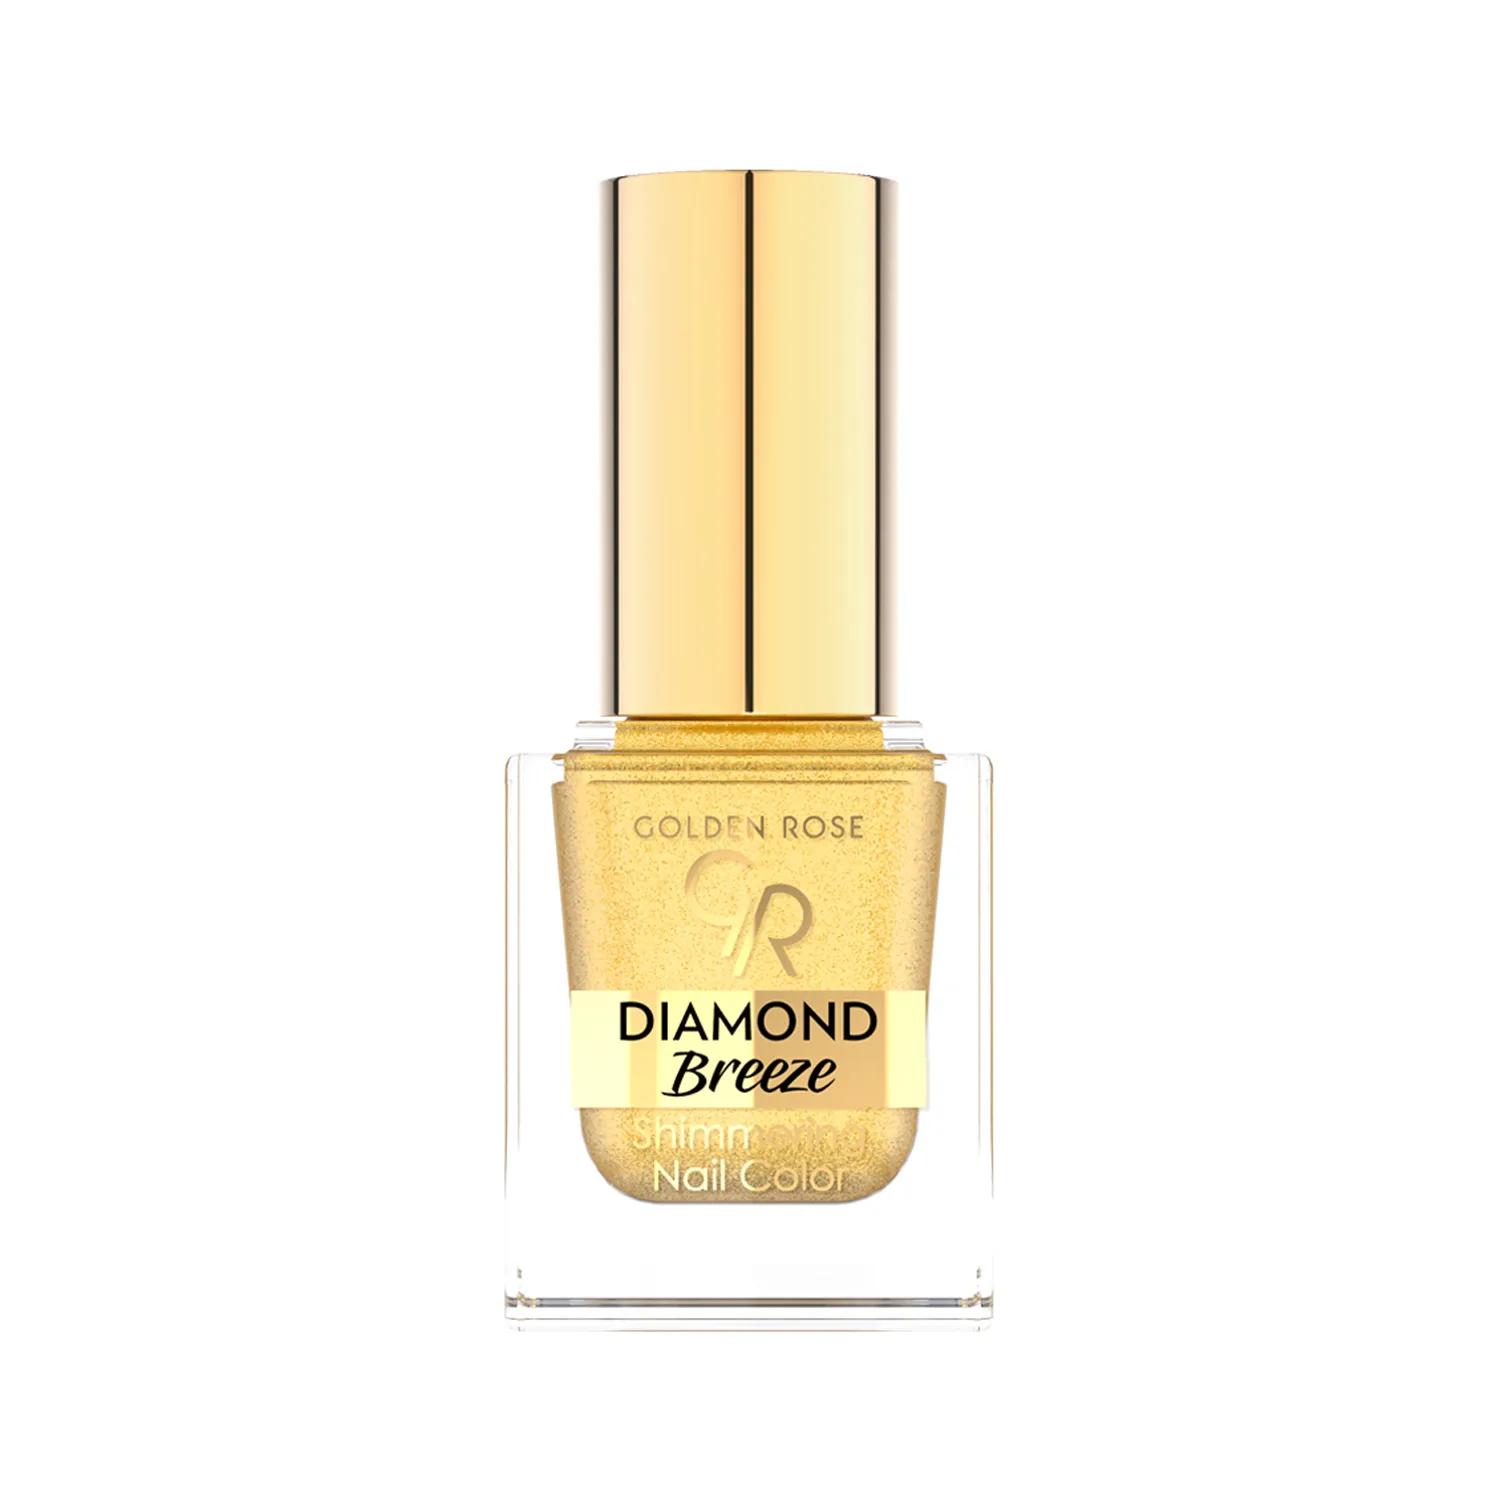 Golden Rose Diamond Breeze Shimmering Nail Color - 24k Gold